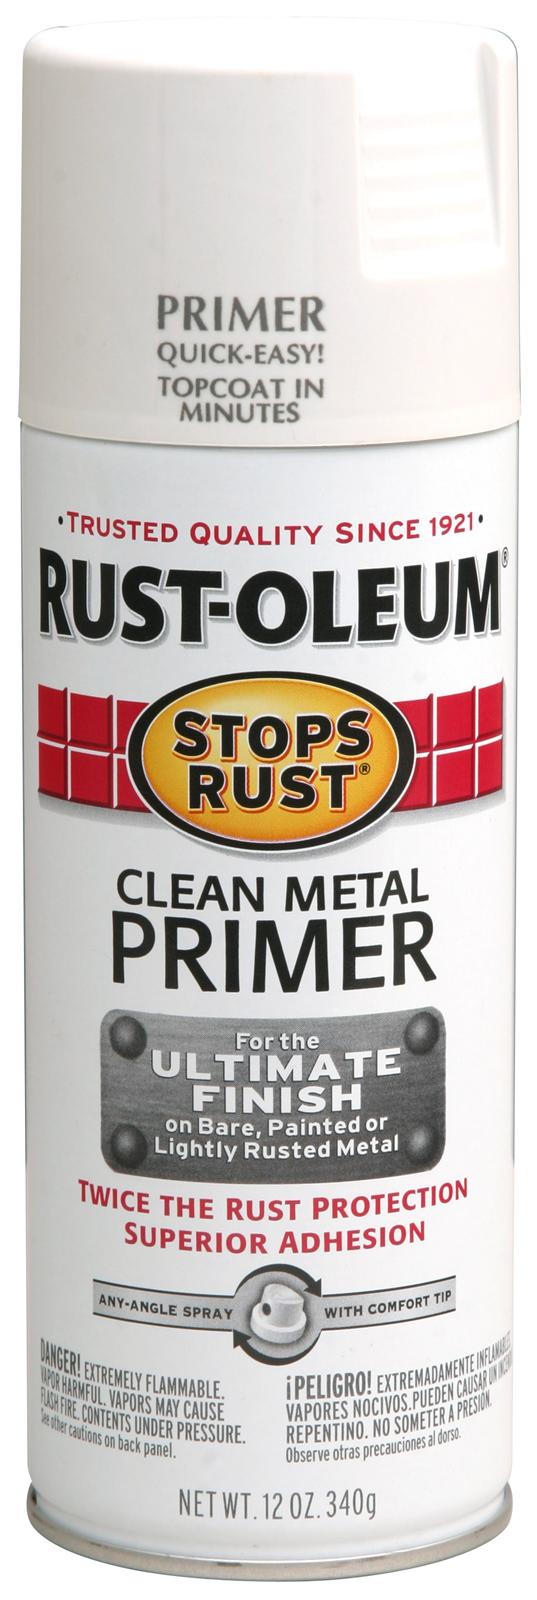 Rust-Oleum Stops Rust Protective Metallic Finish Spray Paint